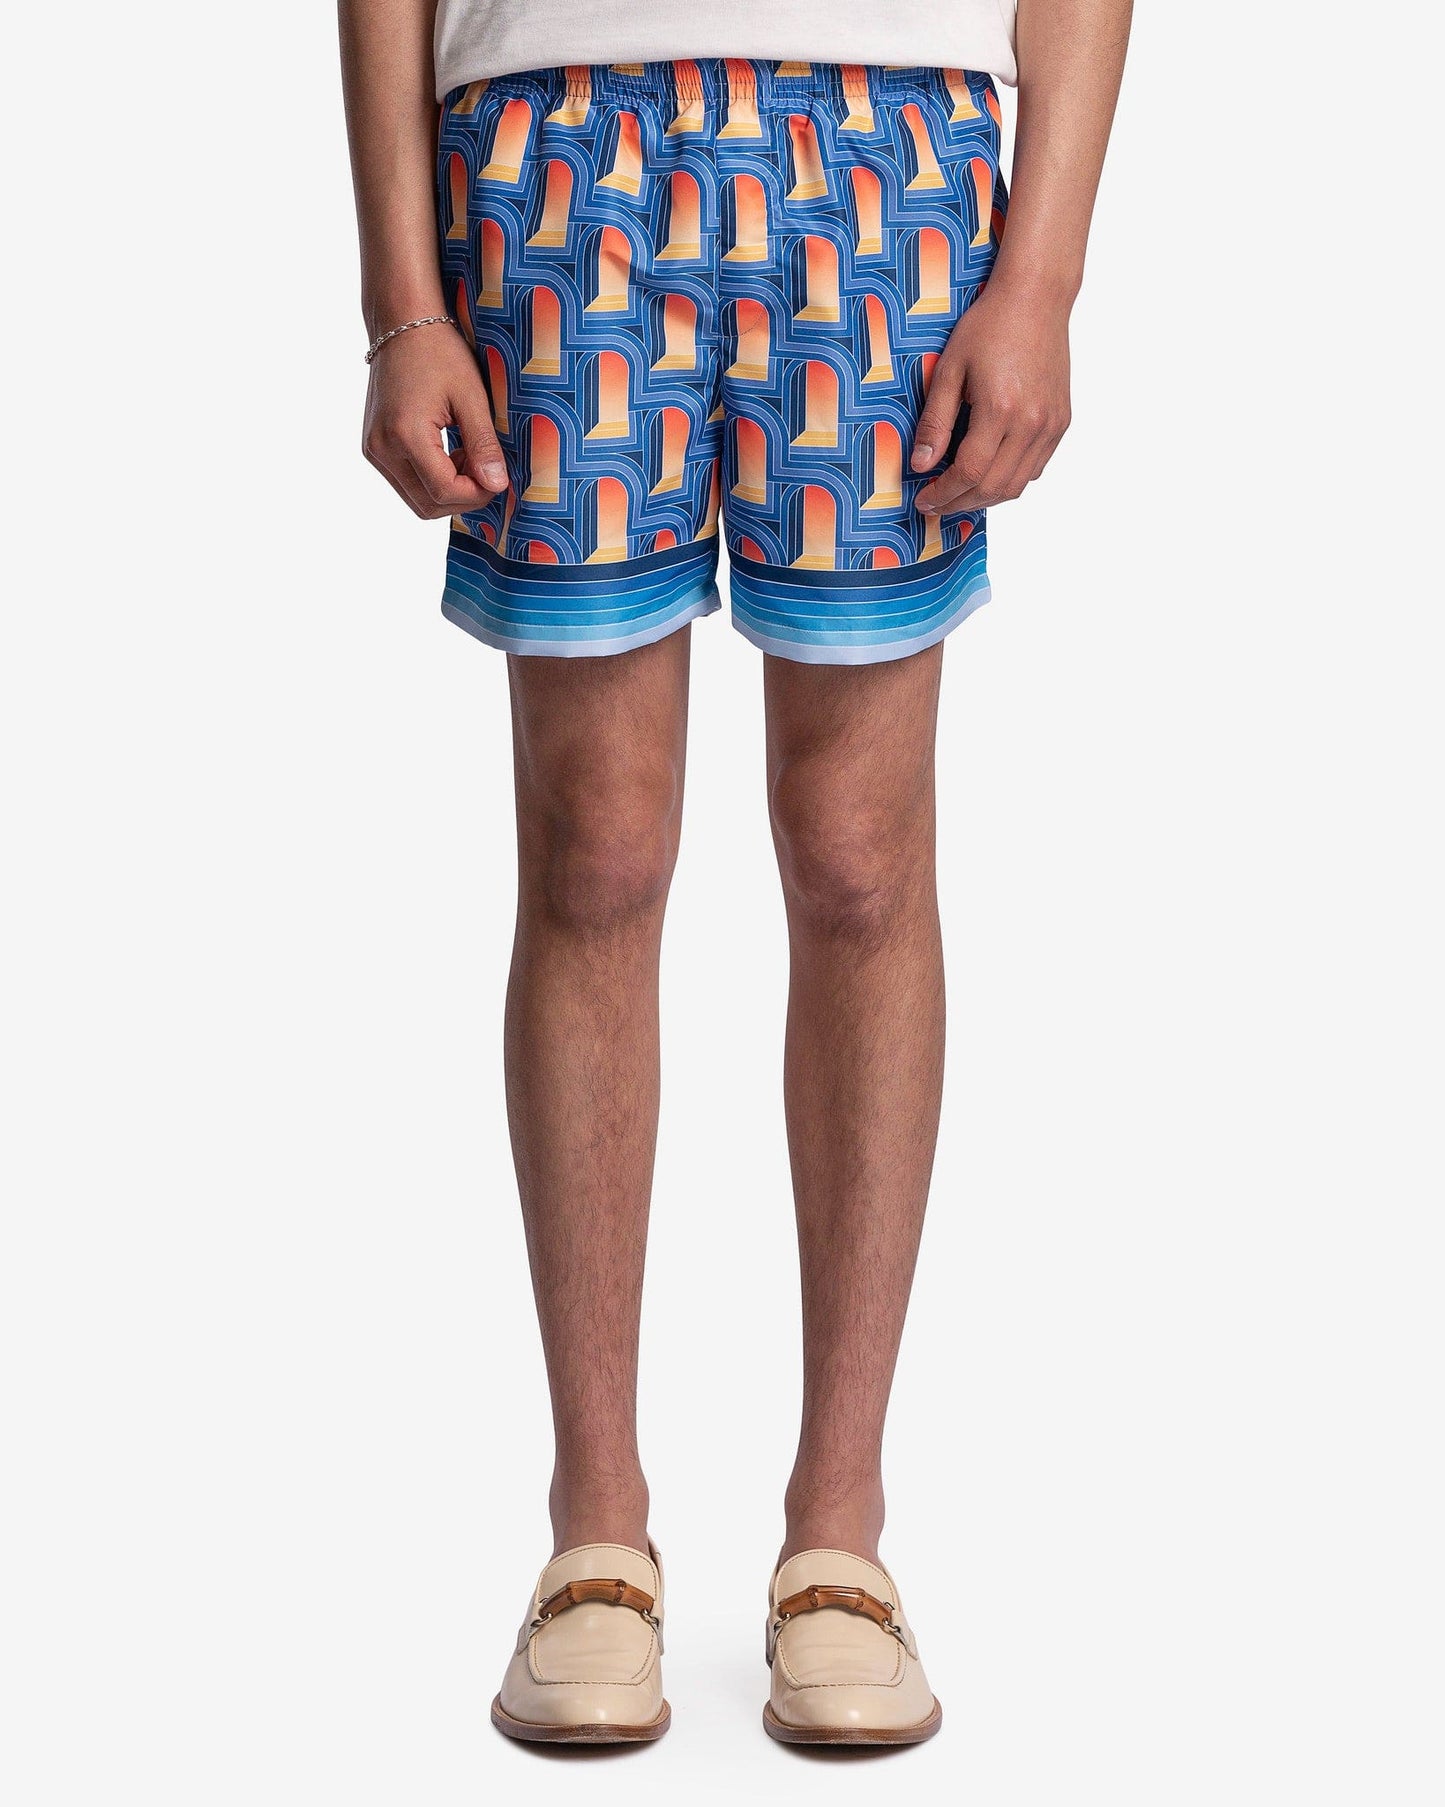 Casablanca Men's Shorts Arche de Nuit Printed Swim Trunks in Multi